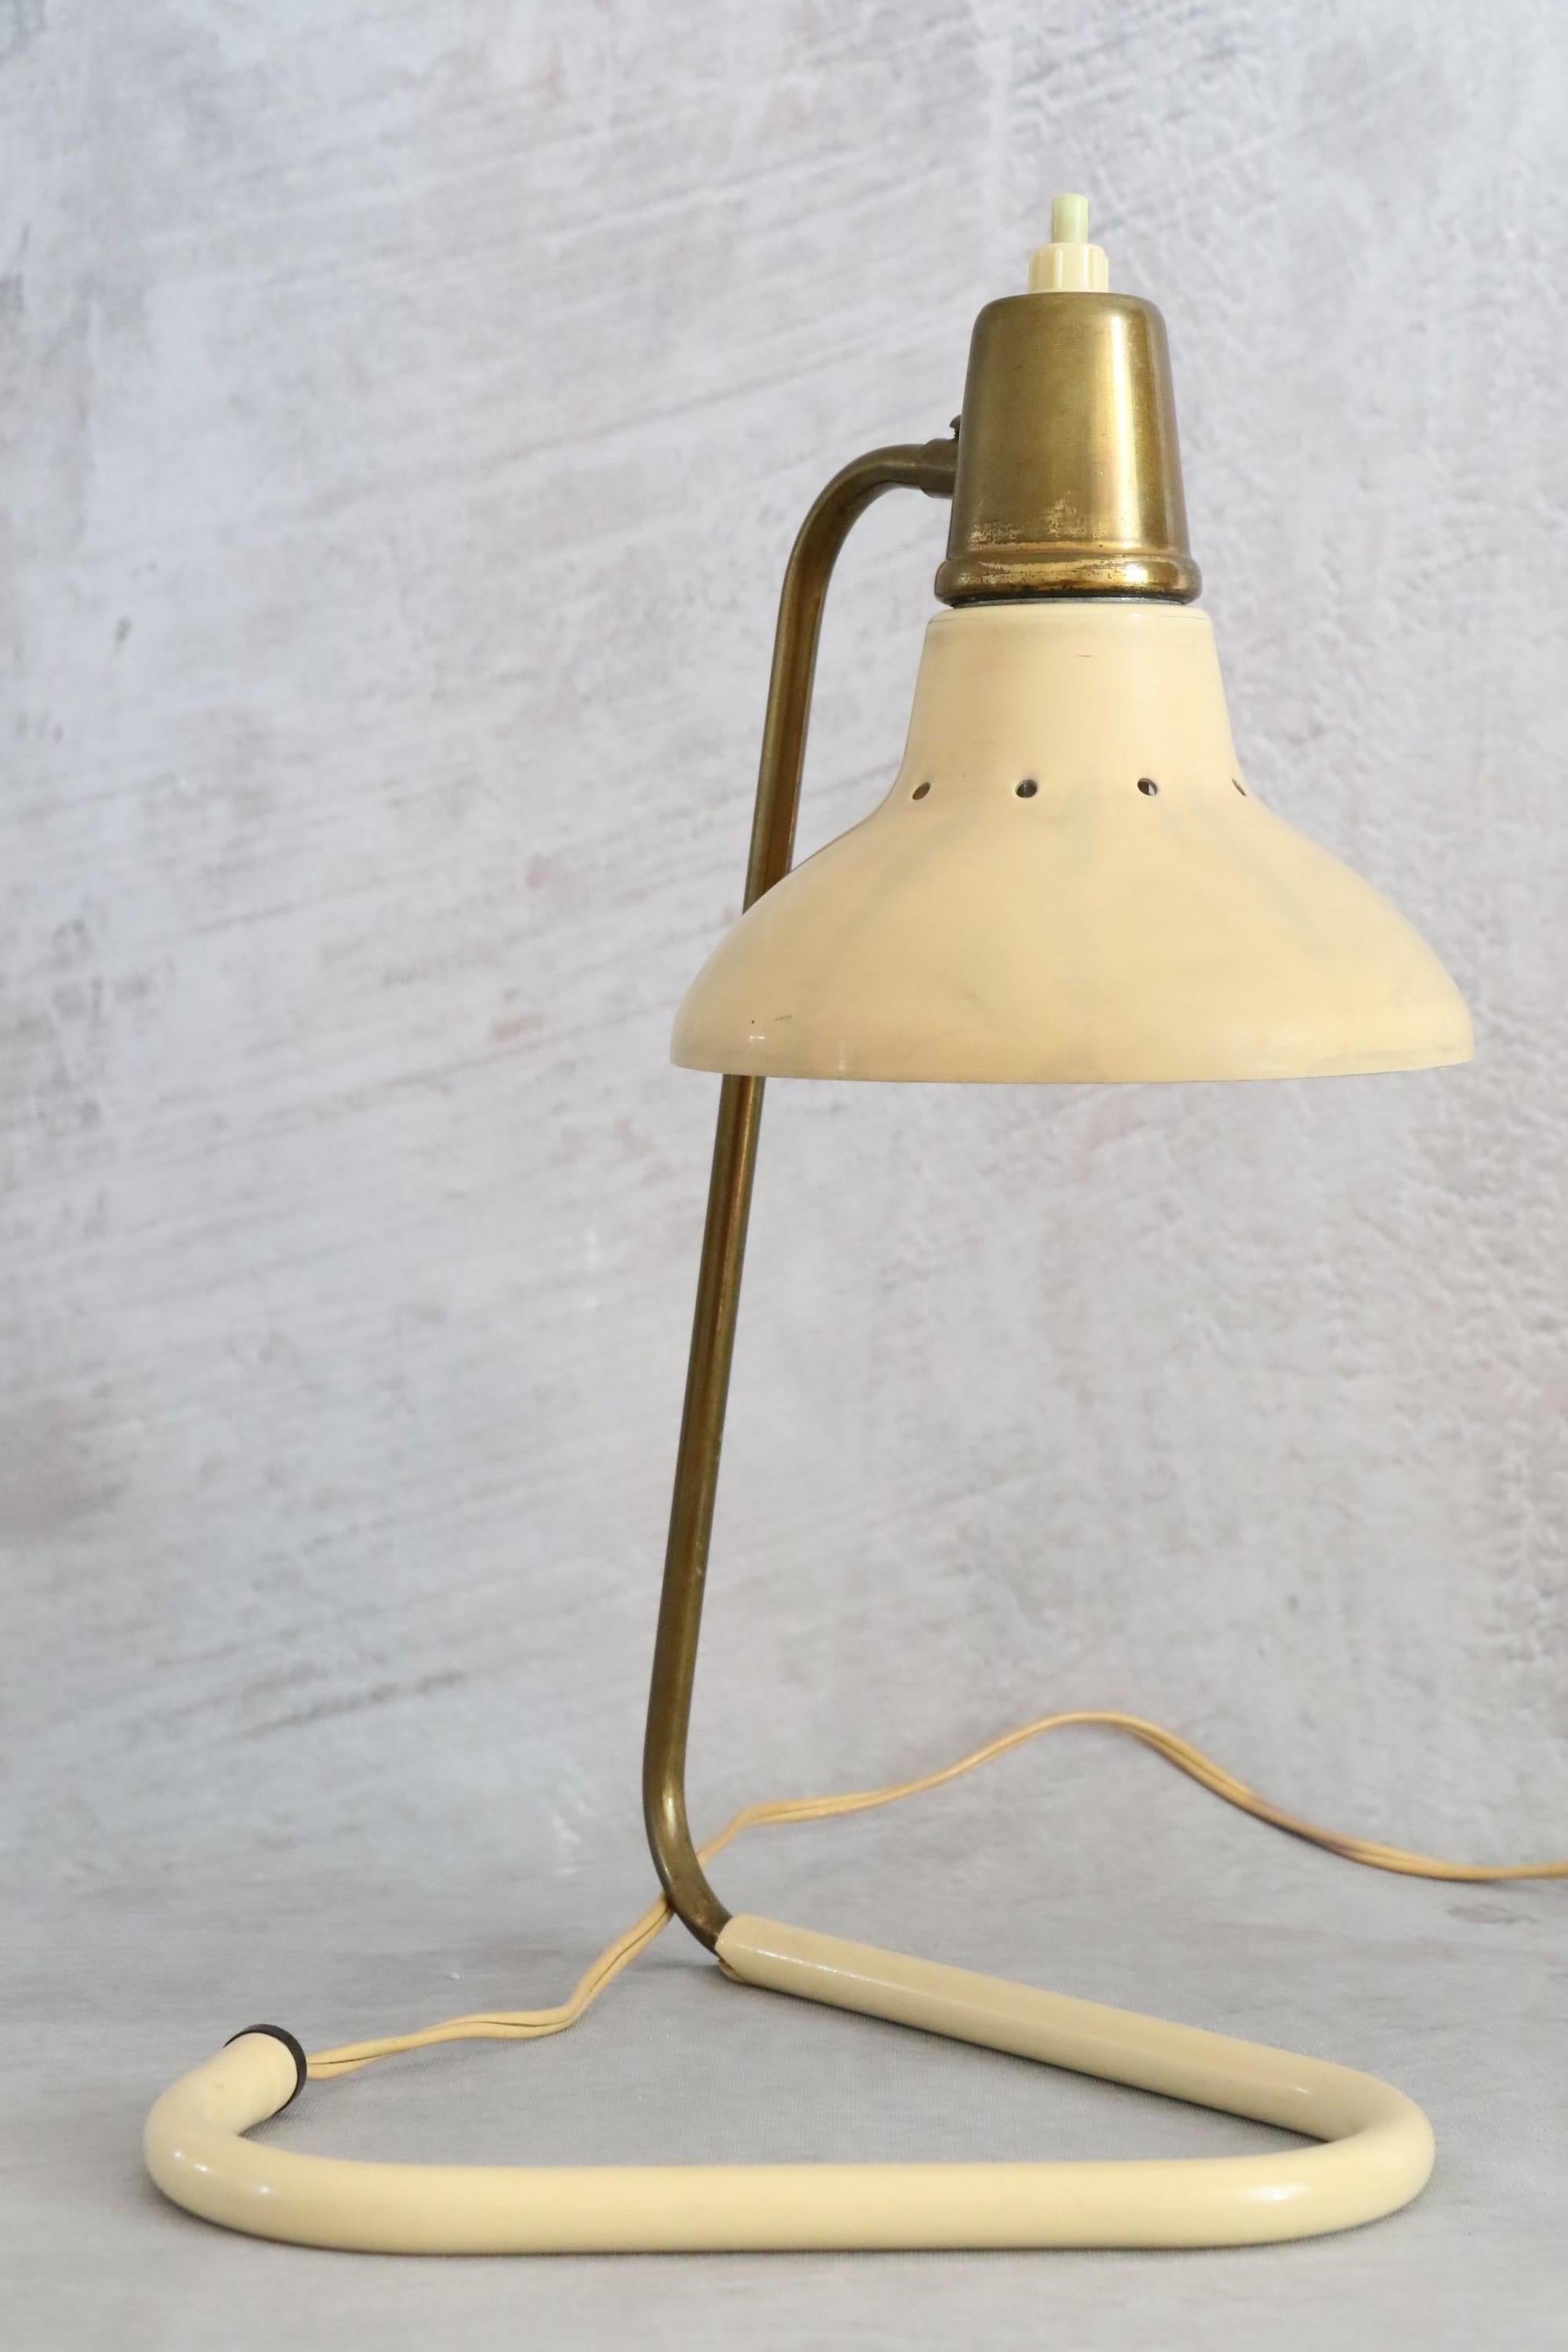 Robert Caillat Mid-Century Modern French Table Lamp 1950 Era Biny Guariche 9